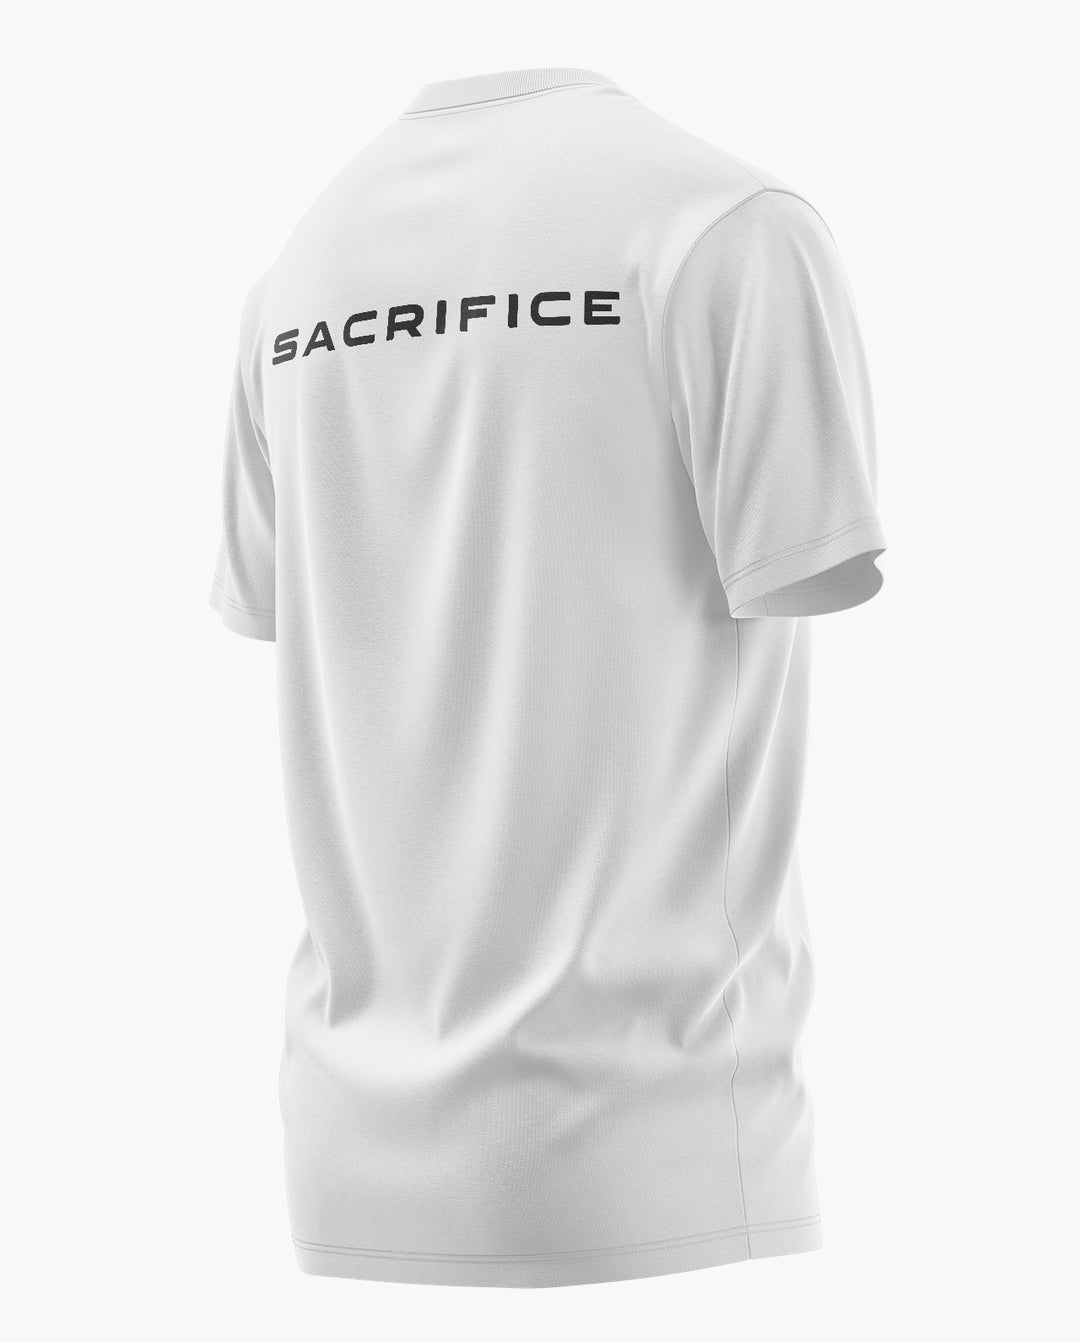 Honor, Valour, Sacrifice T-Shirt